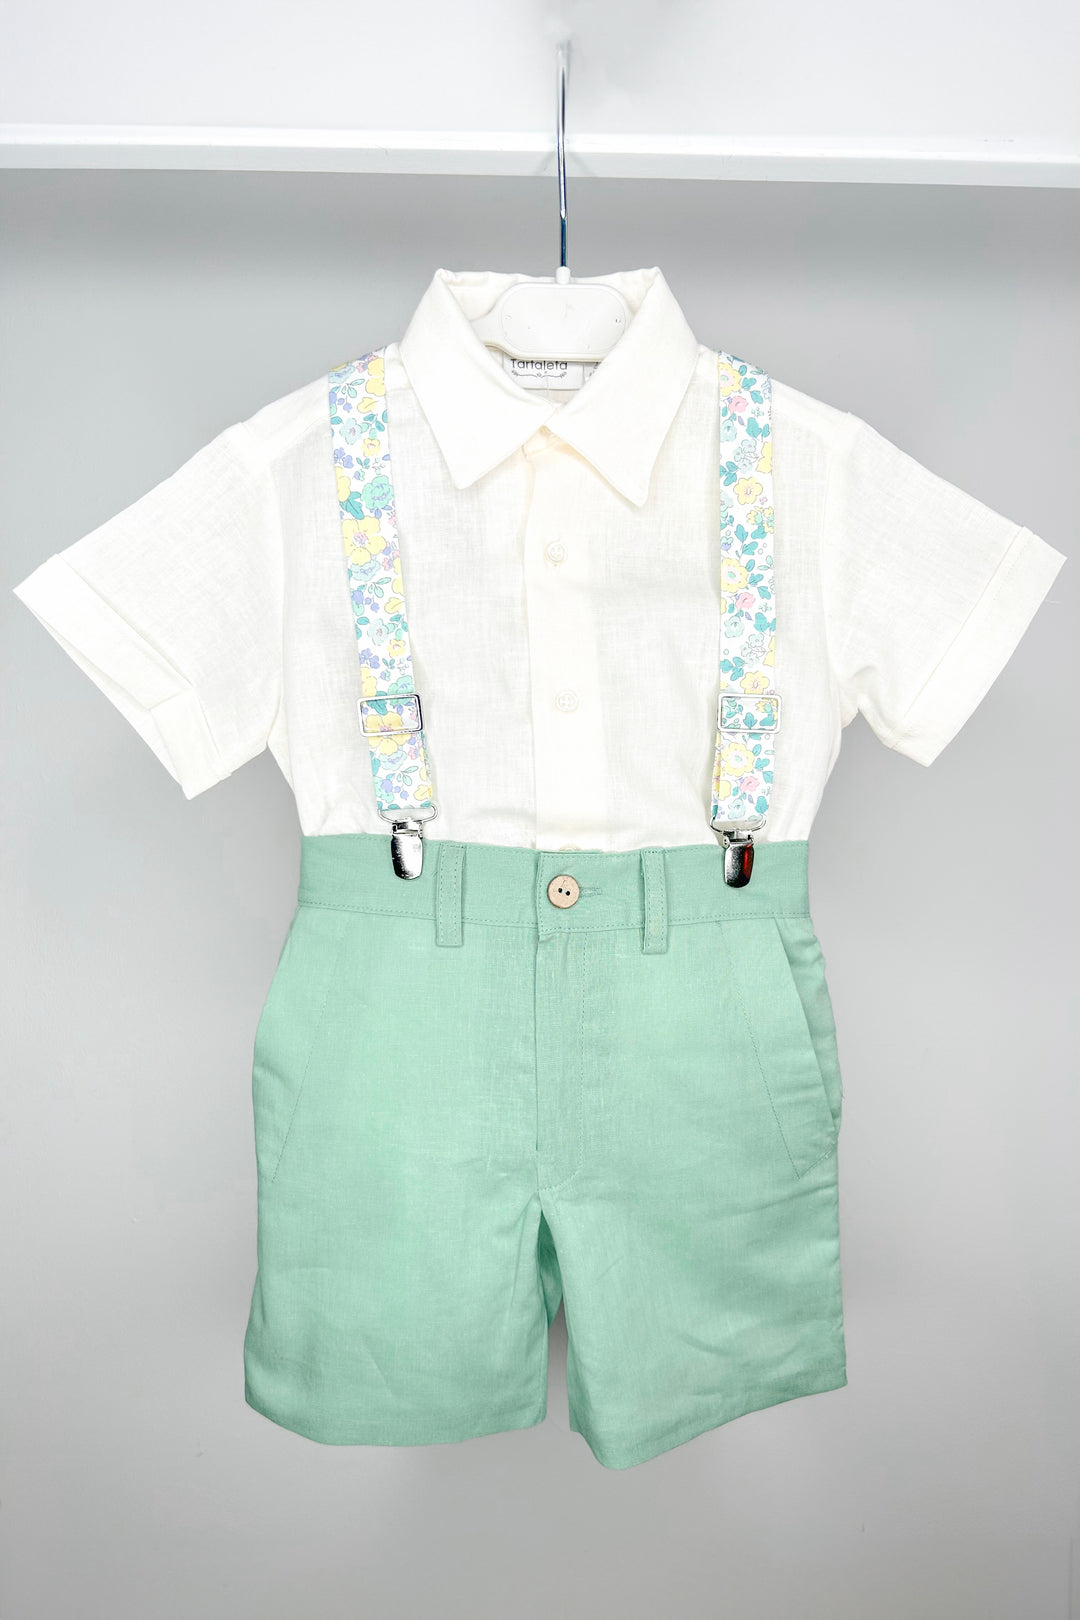 Tartaleta "Greyson" Shirt, Sage Green Shorts & Floral Braces | Millie and John